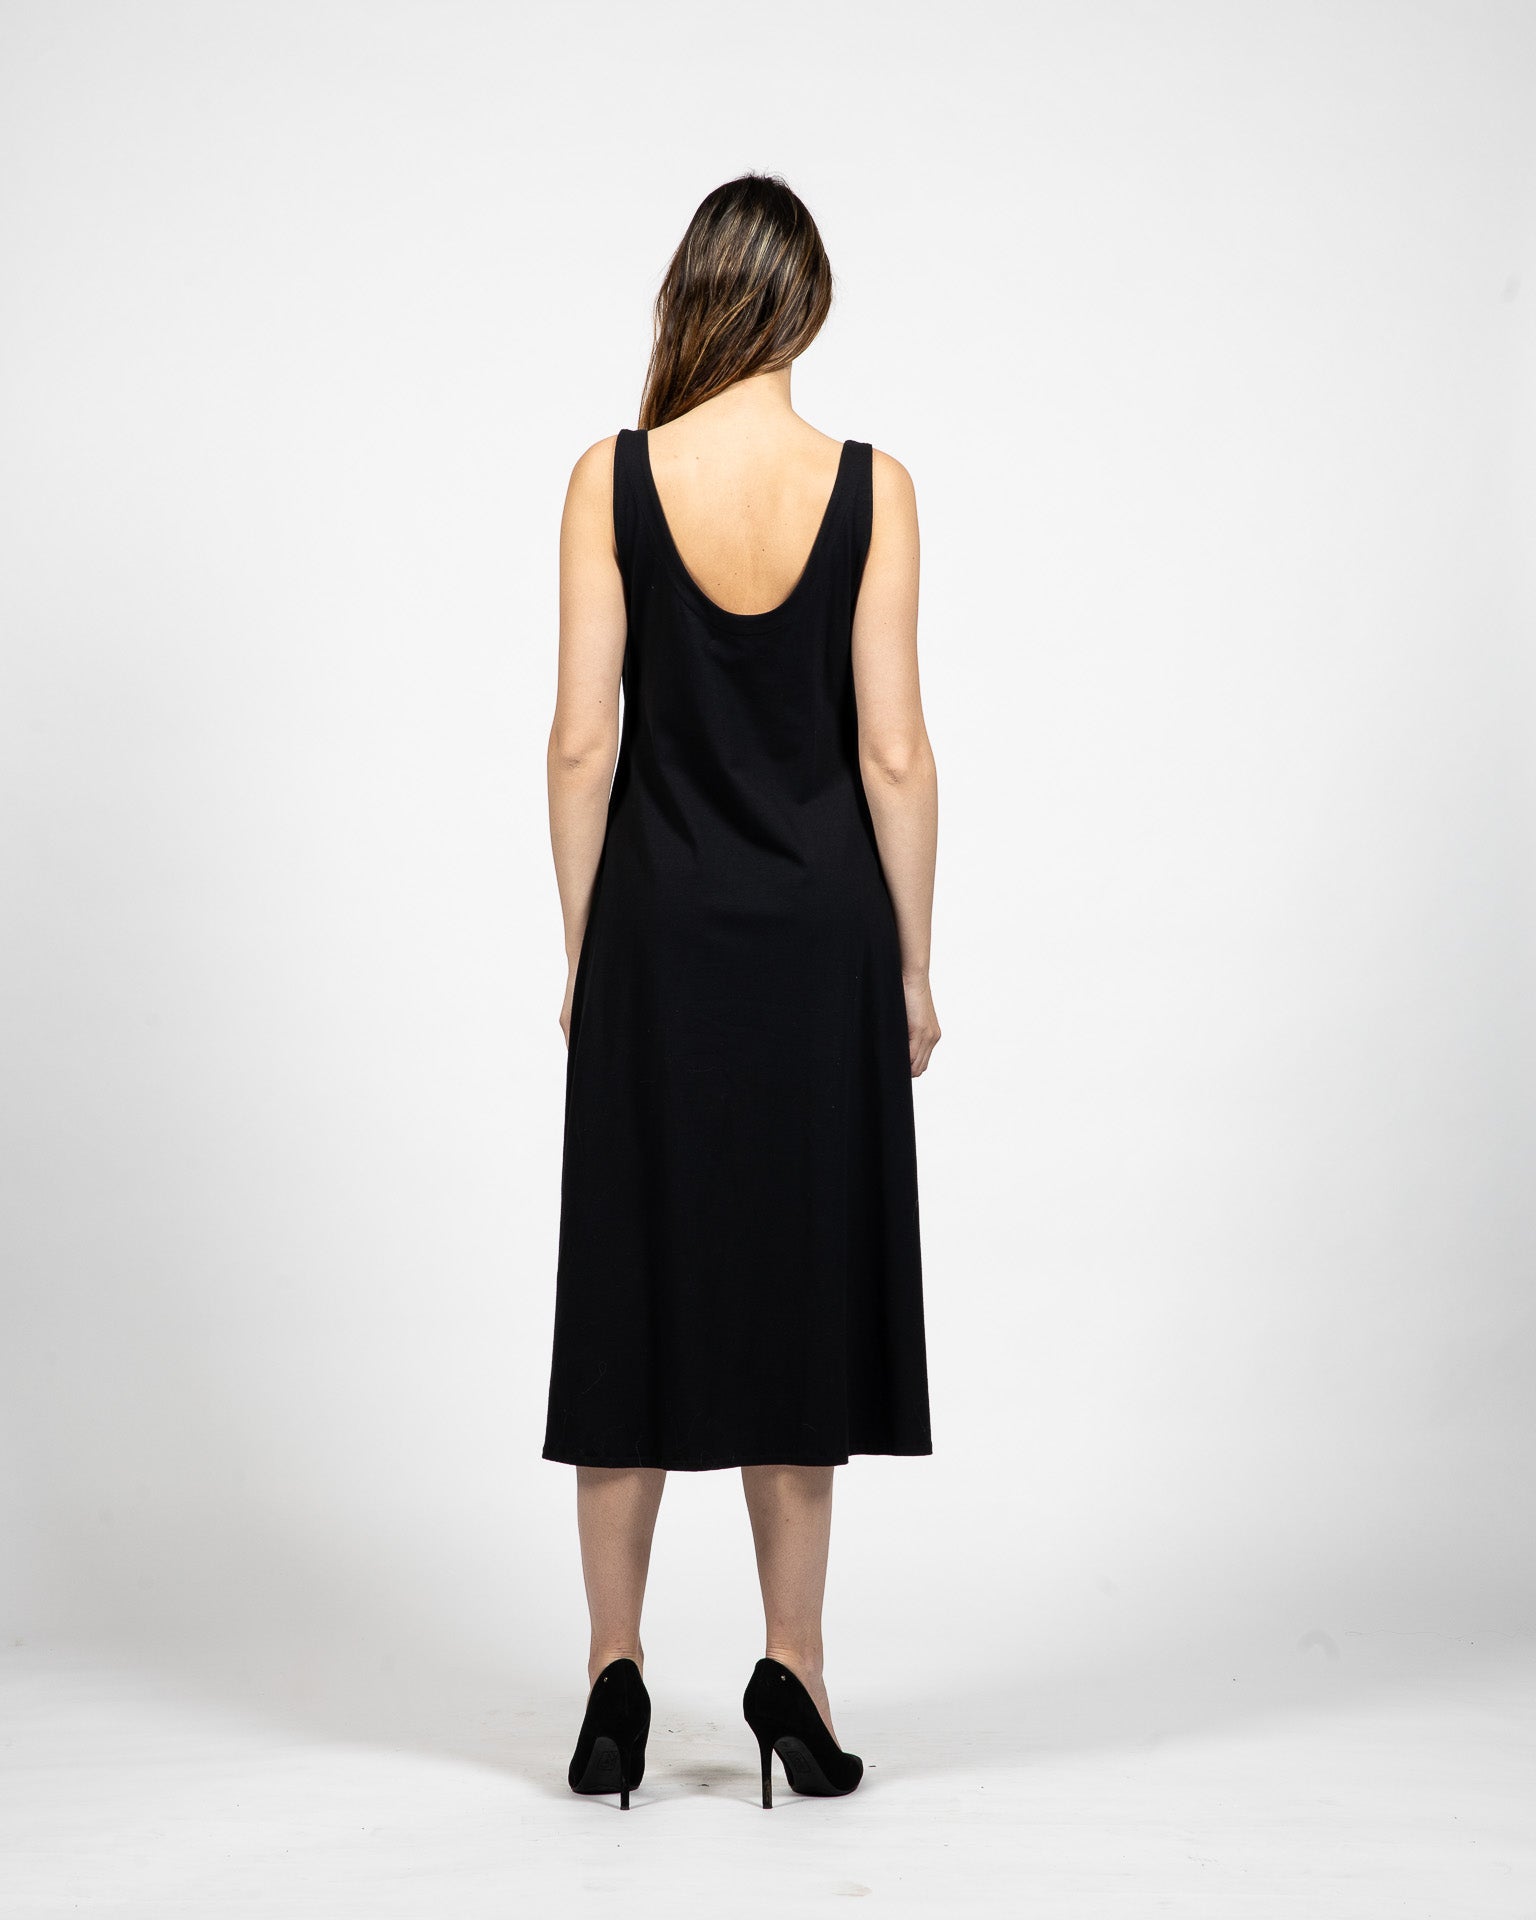 Deep V – Neckline Buttoned Black Dress - Back View - Samuel Vartan